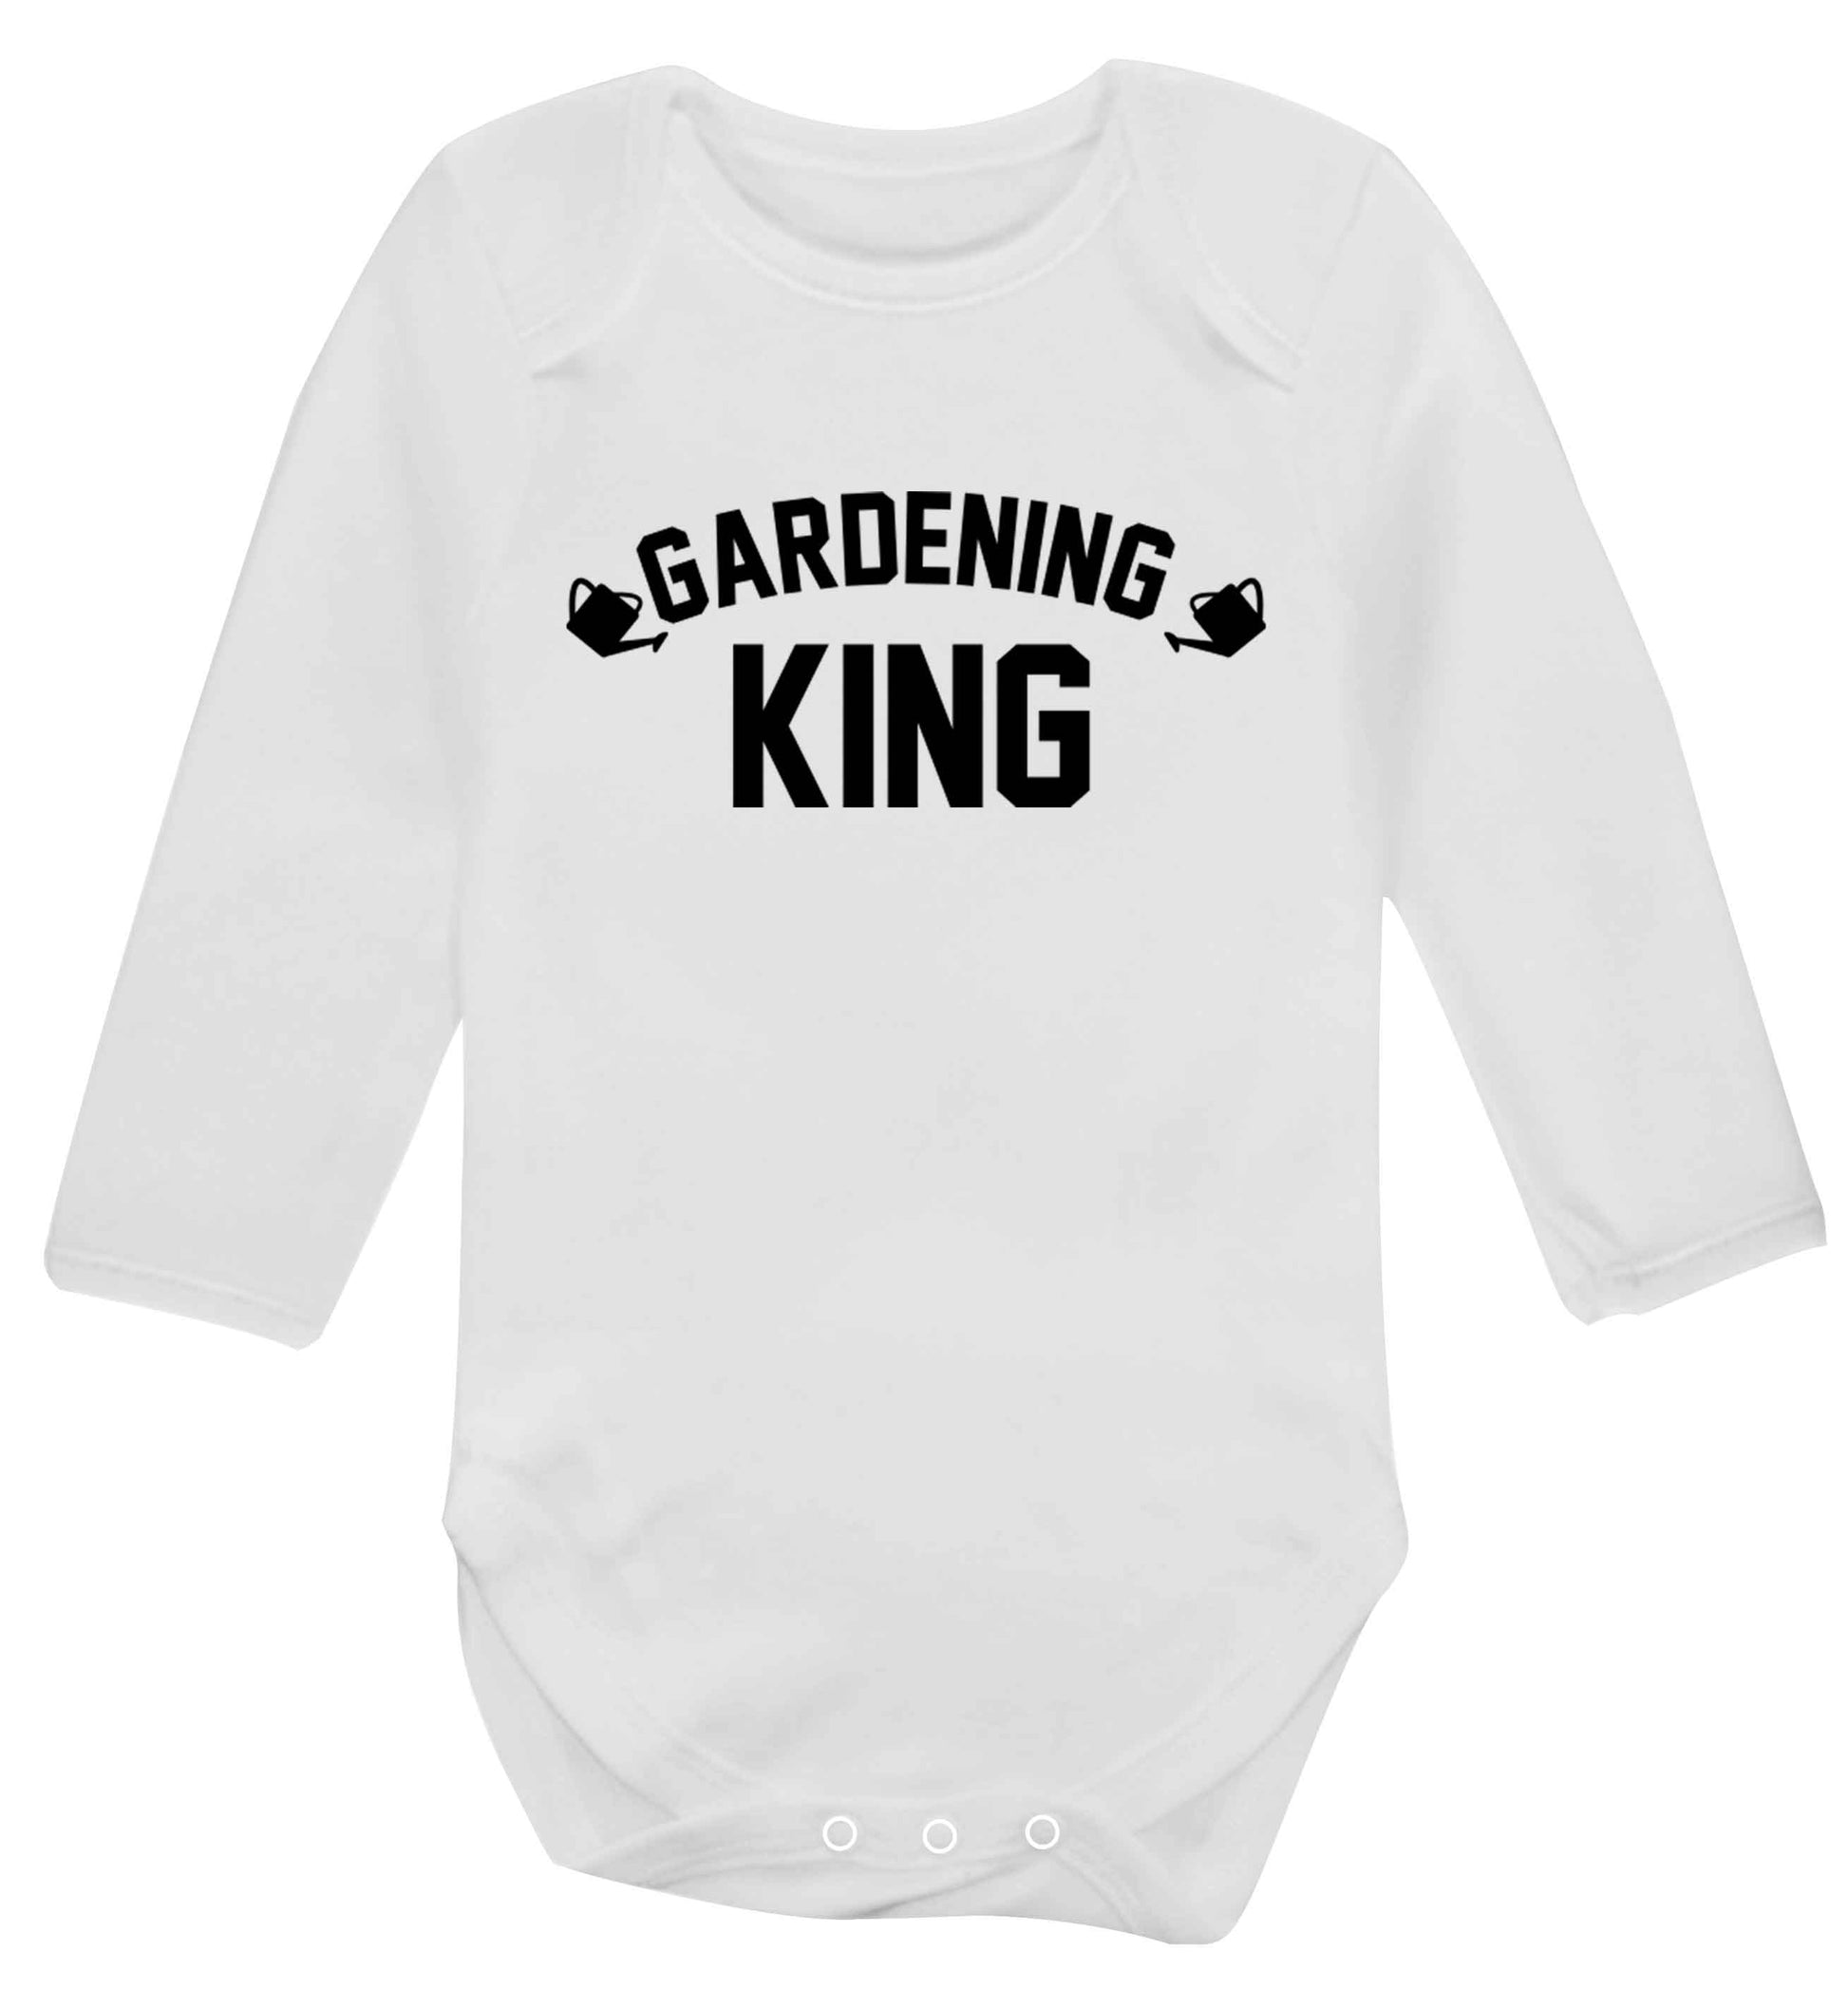 Gardening king Baby Vest long sleeved white 6-12 months